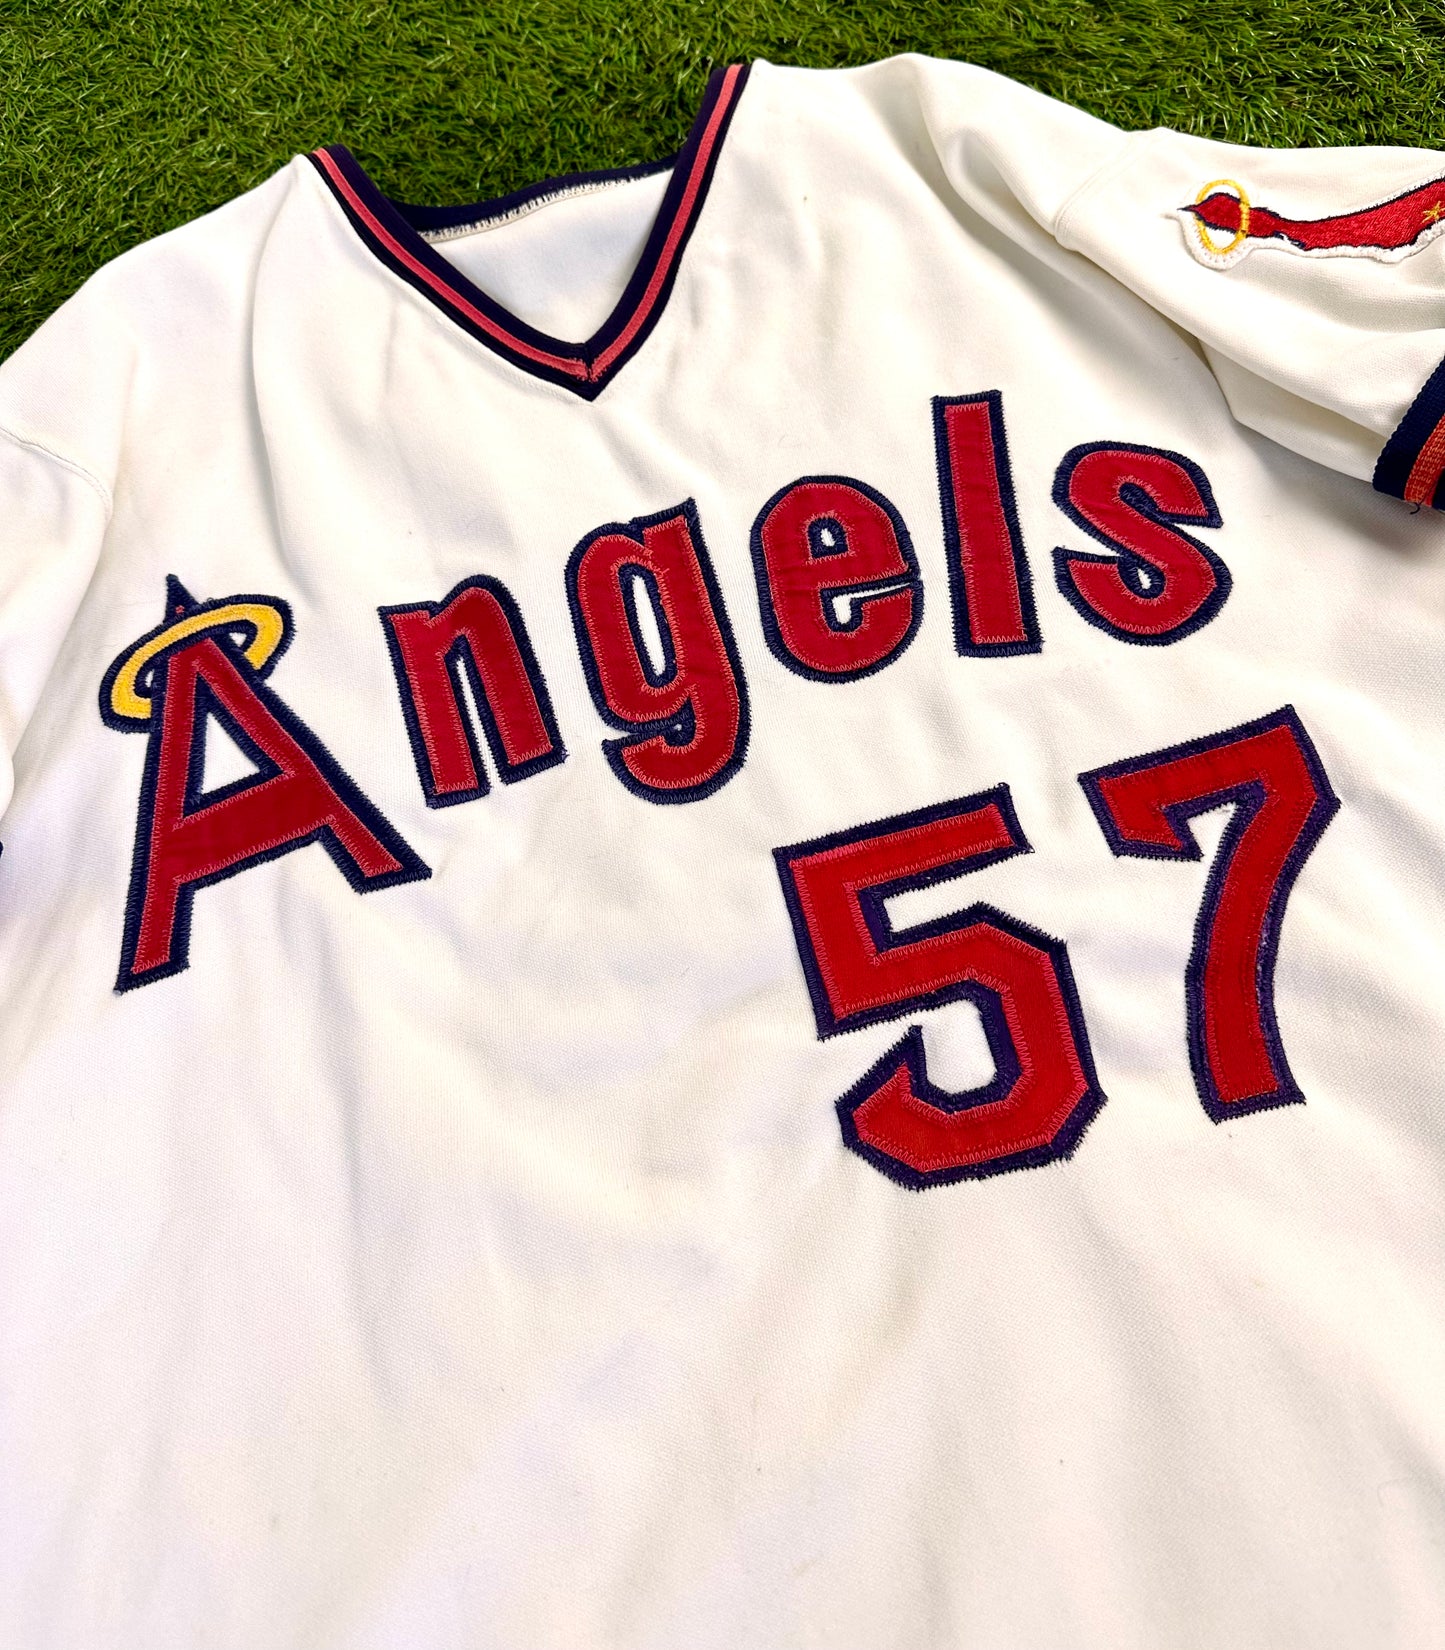 California Angels 1974 Game Worn Doug Howard MLB Baseball Jersey (44/Large)